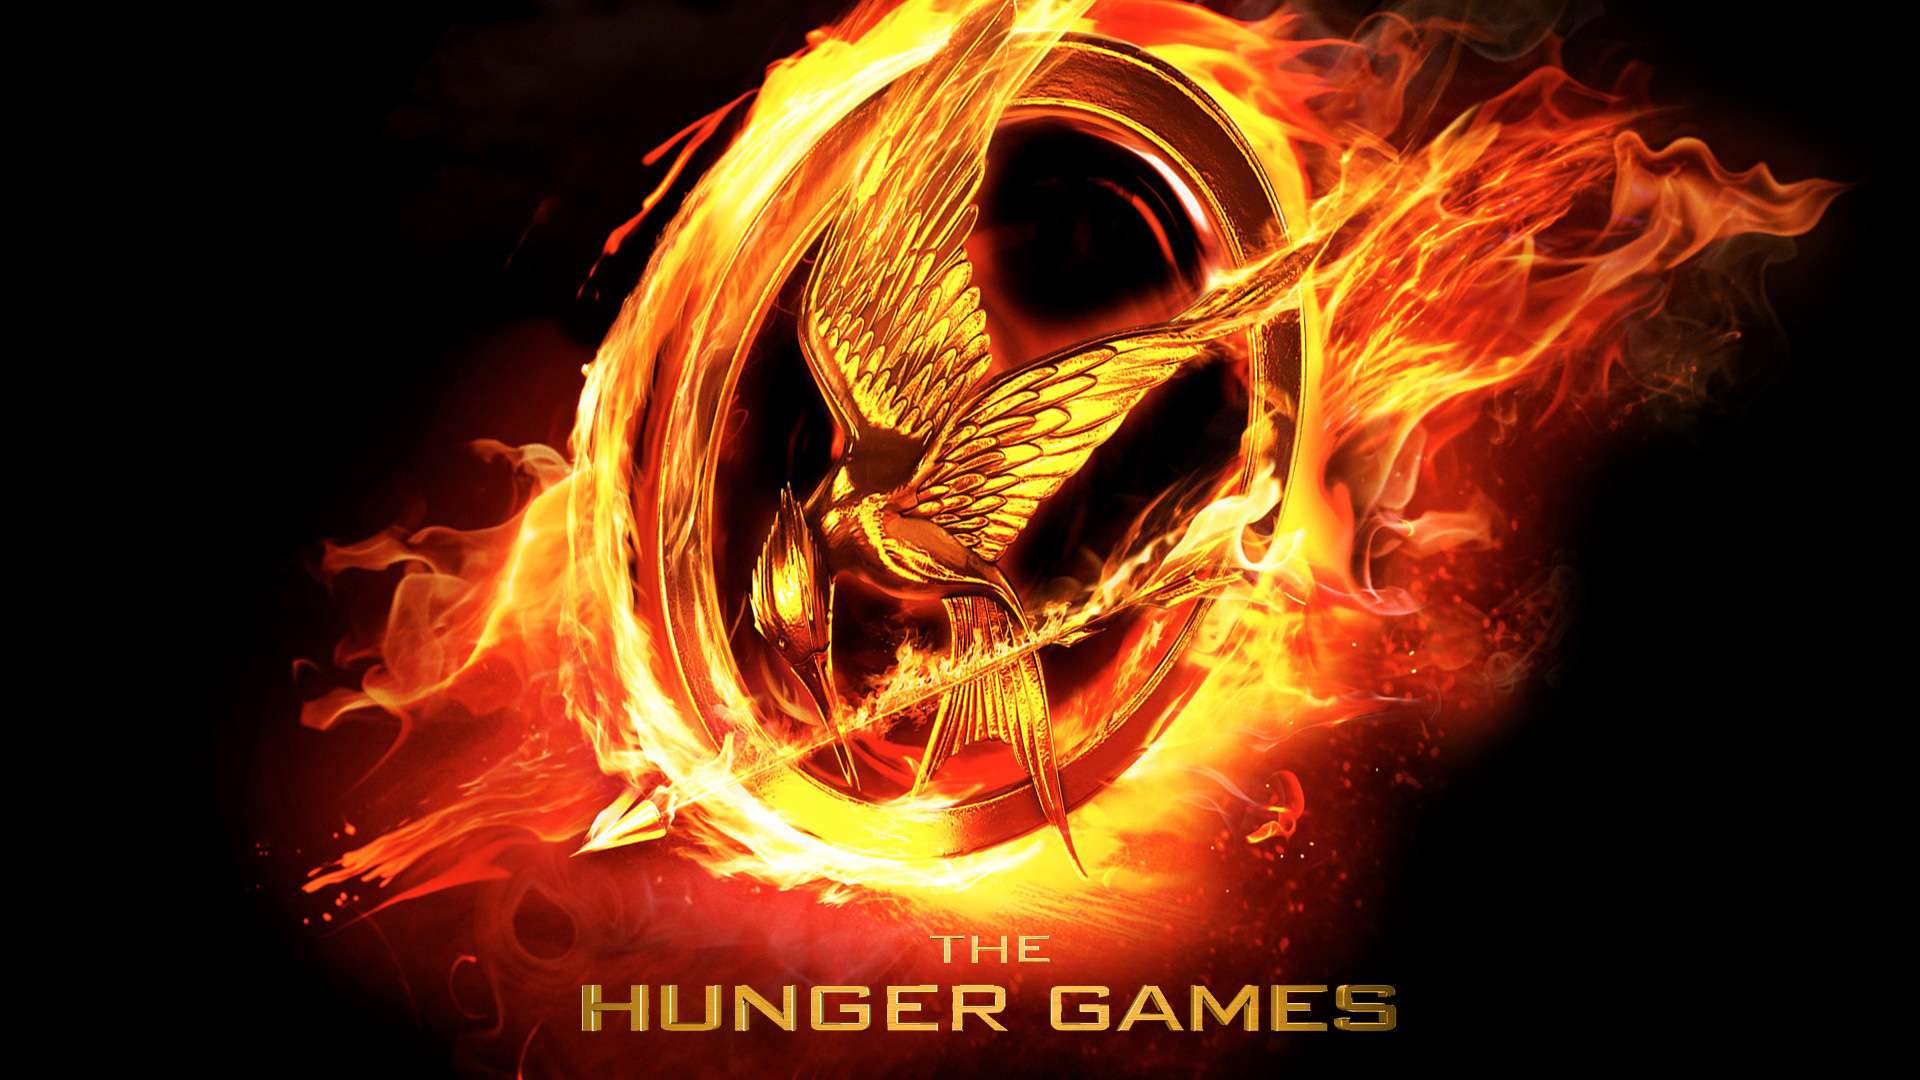 Free The Hunger Games Wallpaper HD ImageBankbiz